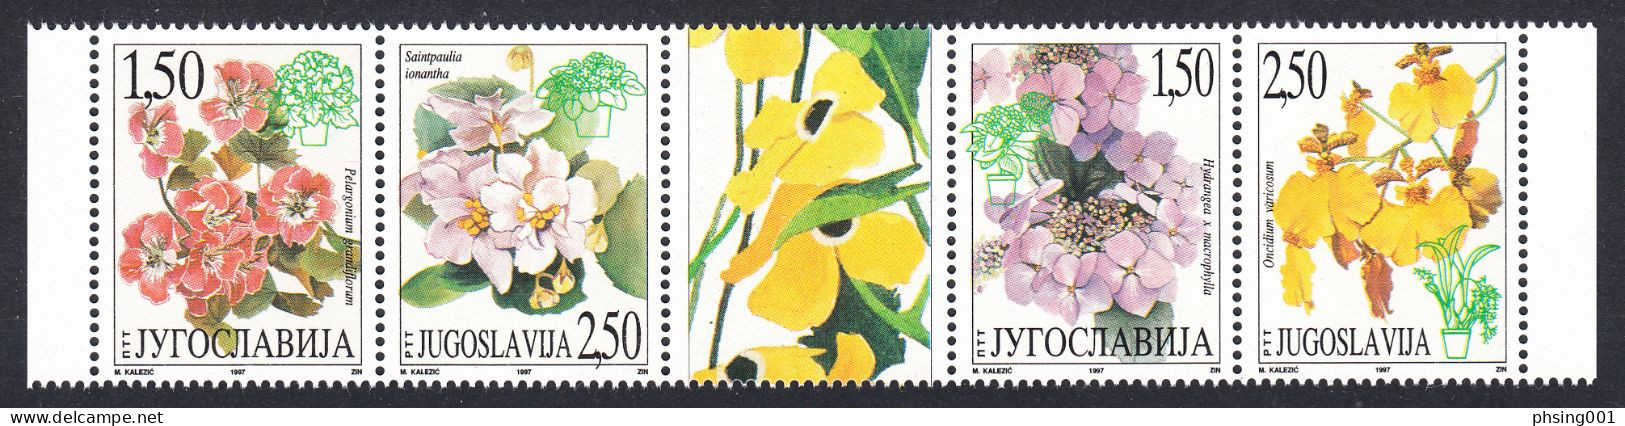 Yugoslavia 1997, Europa, Tennis, Singing birds, Flowers, Icones, Complete Year, MNH